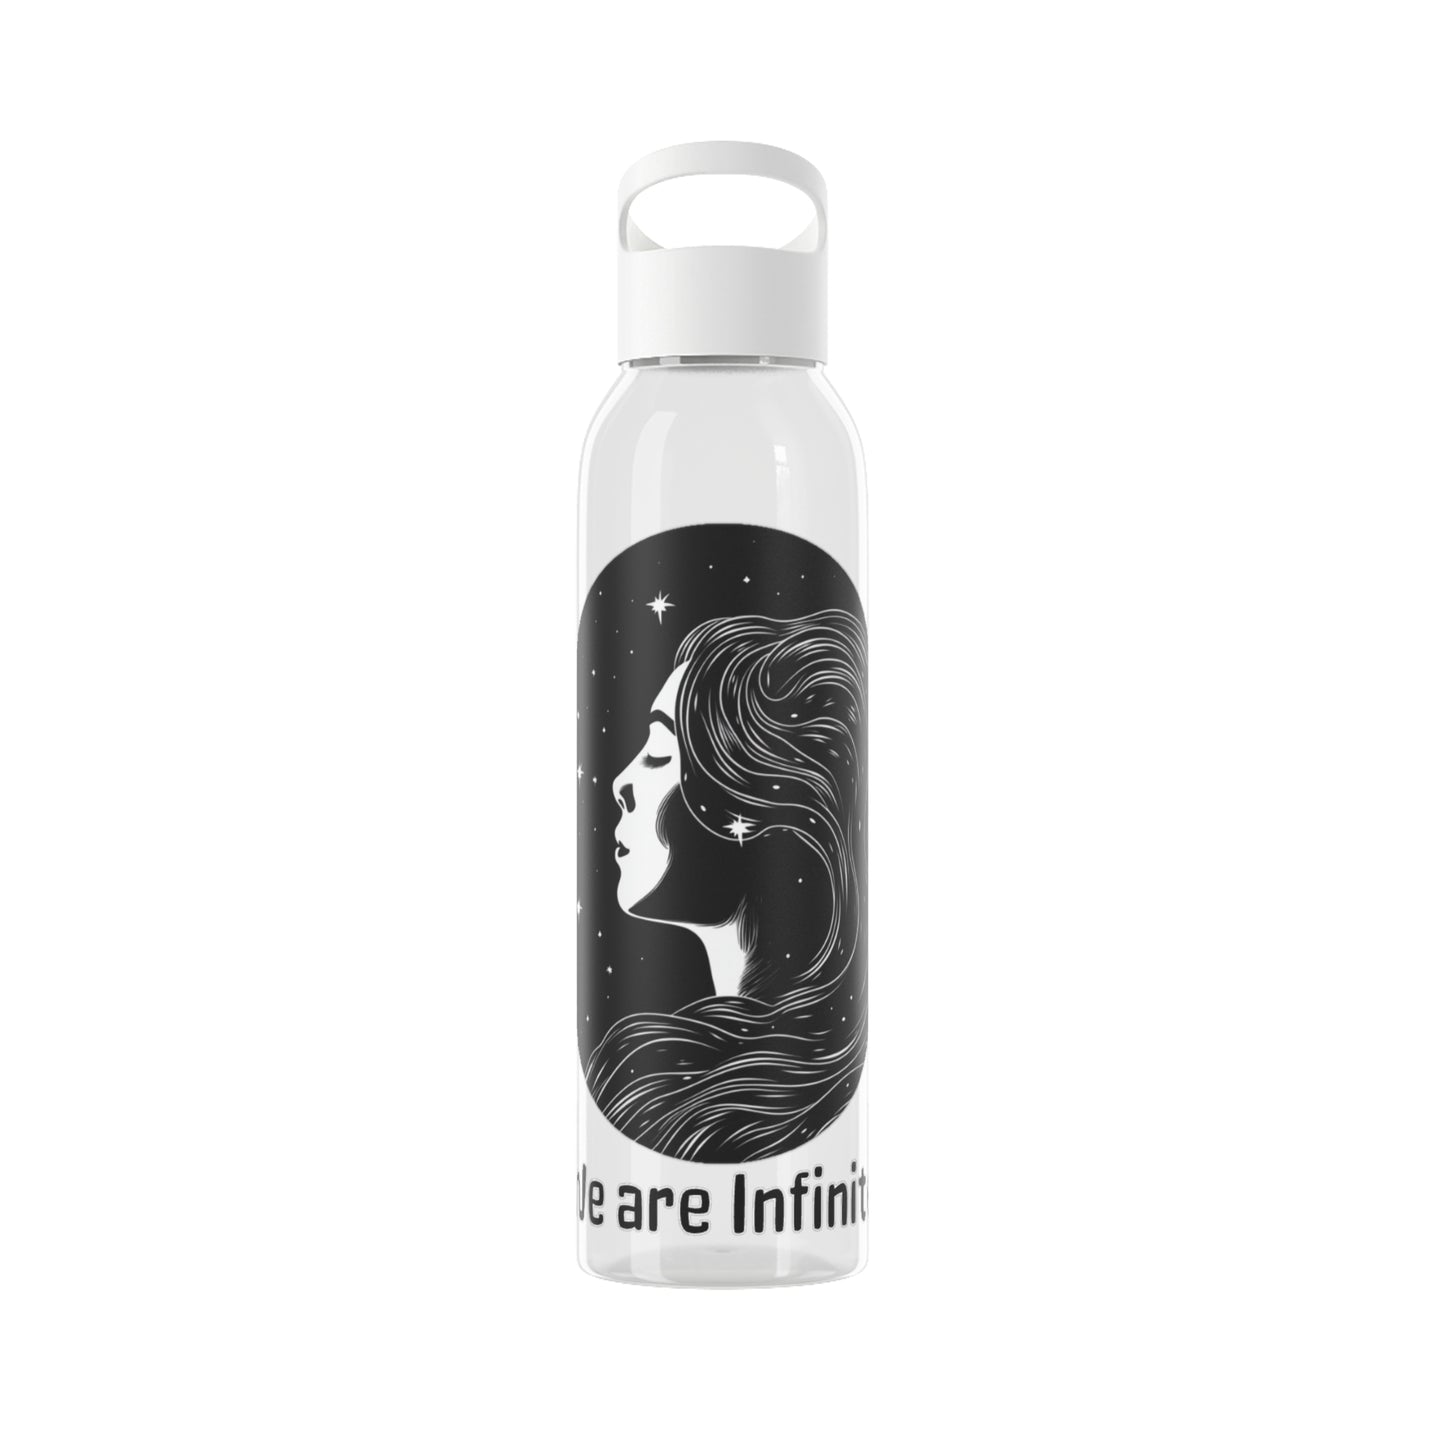 We are Infinite | Sky Water Bottle